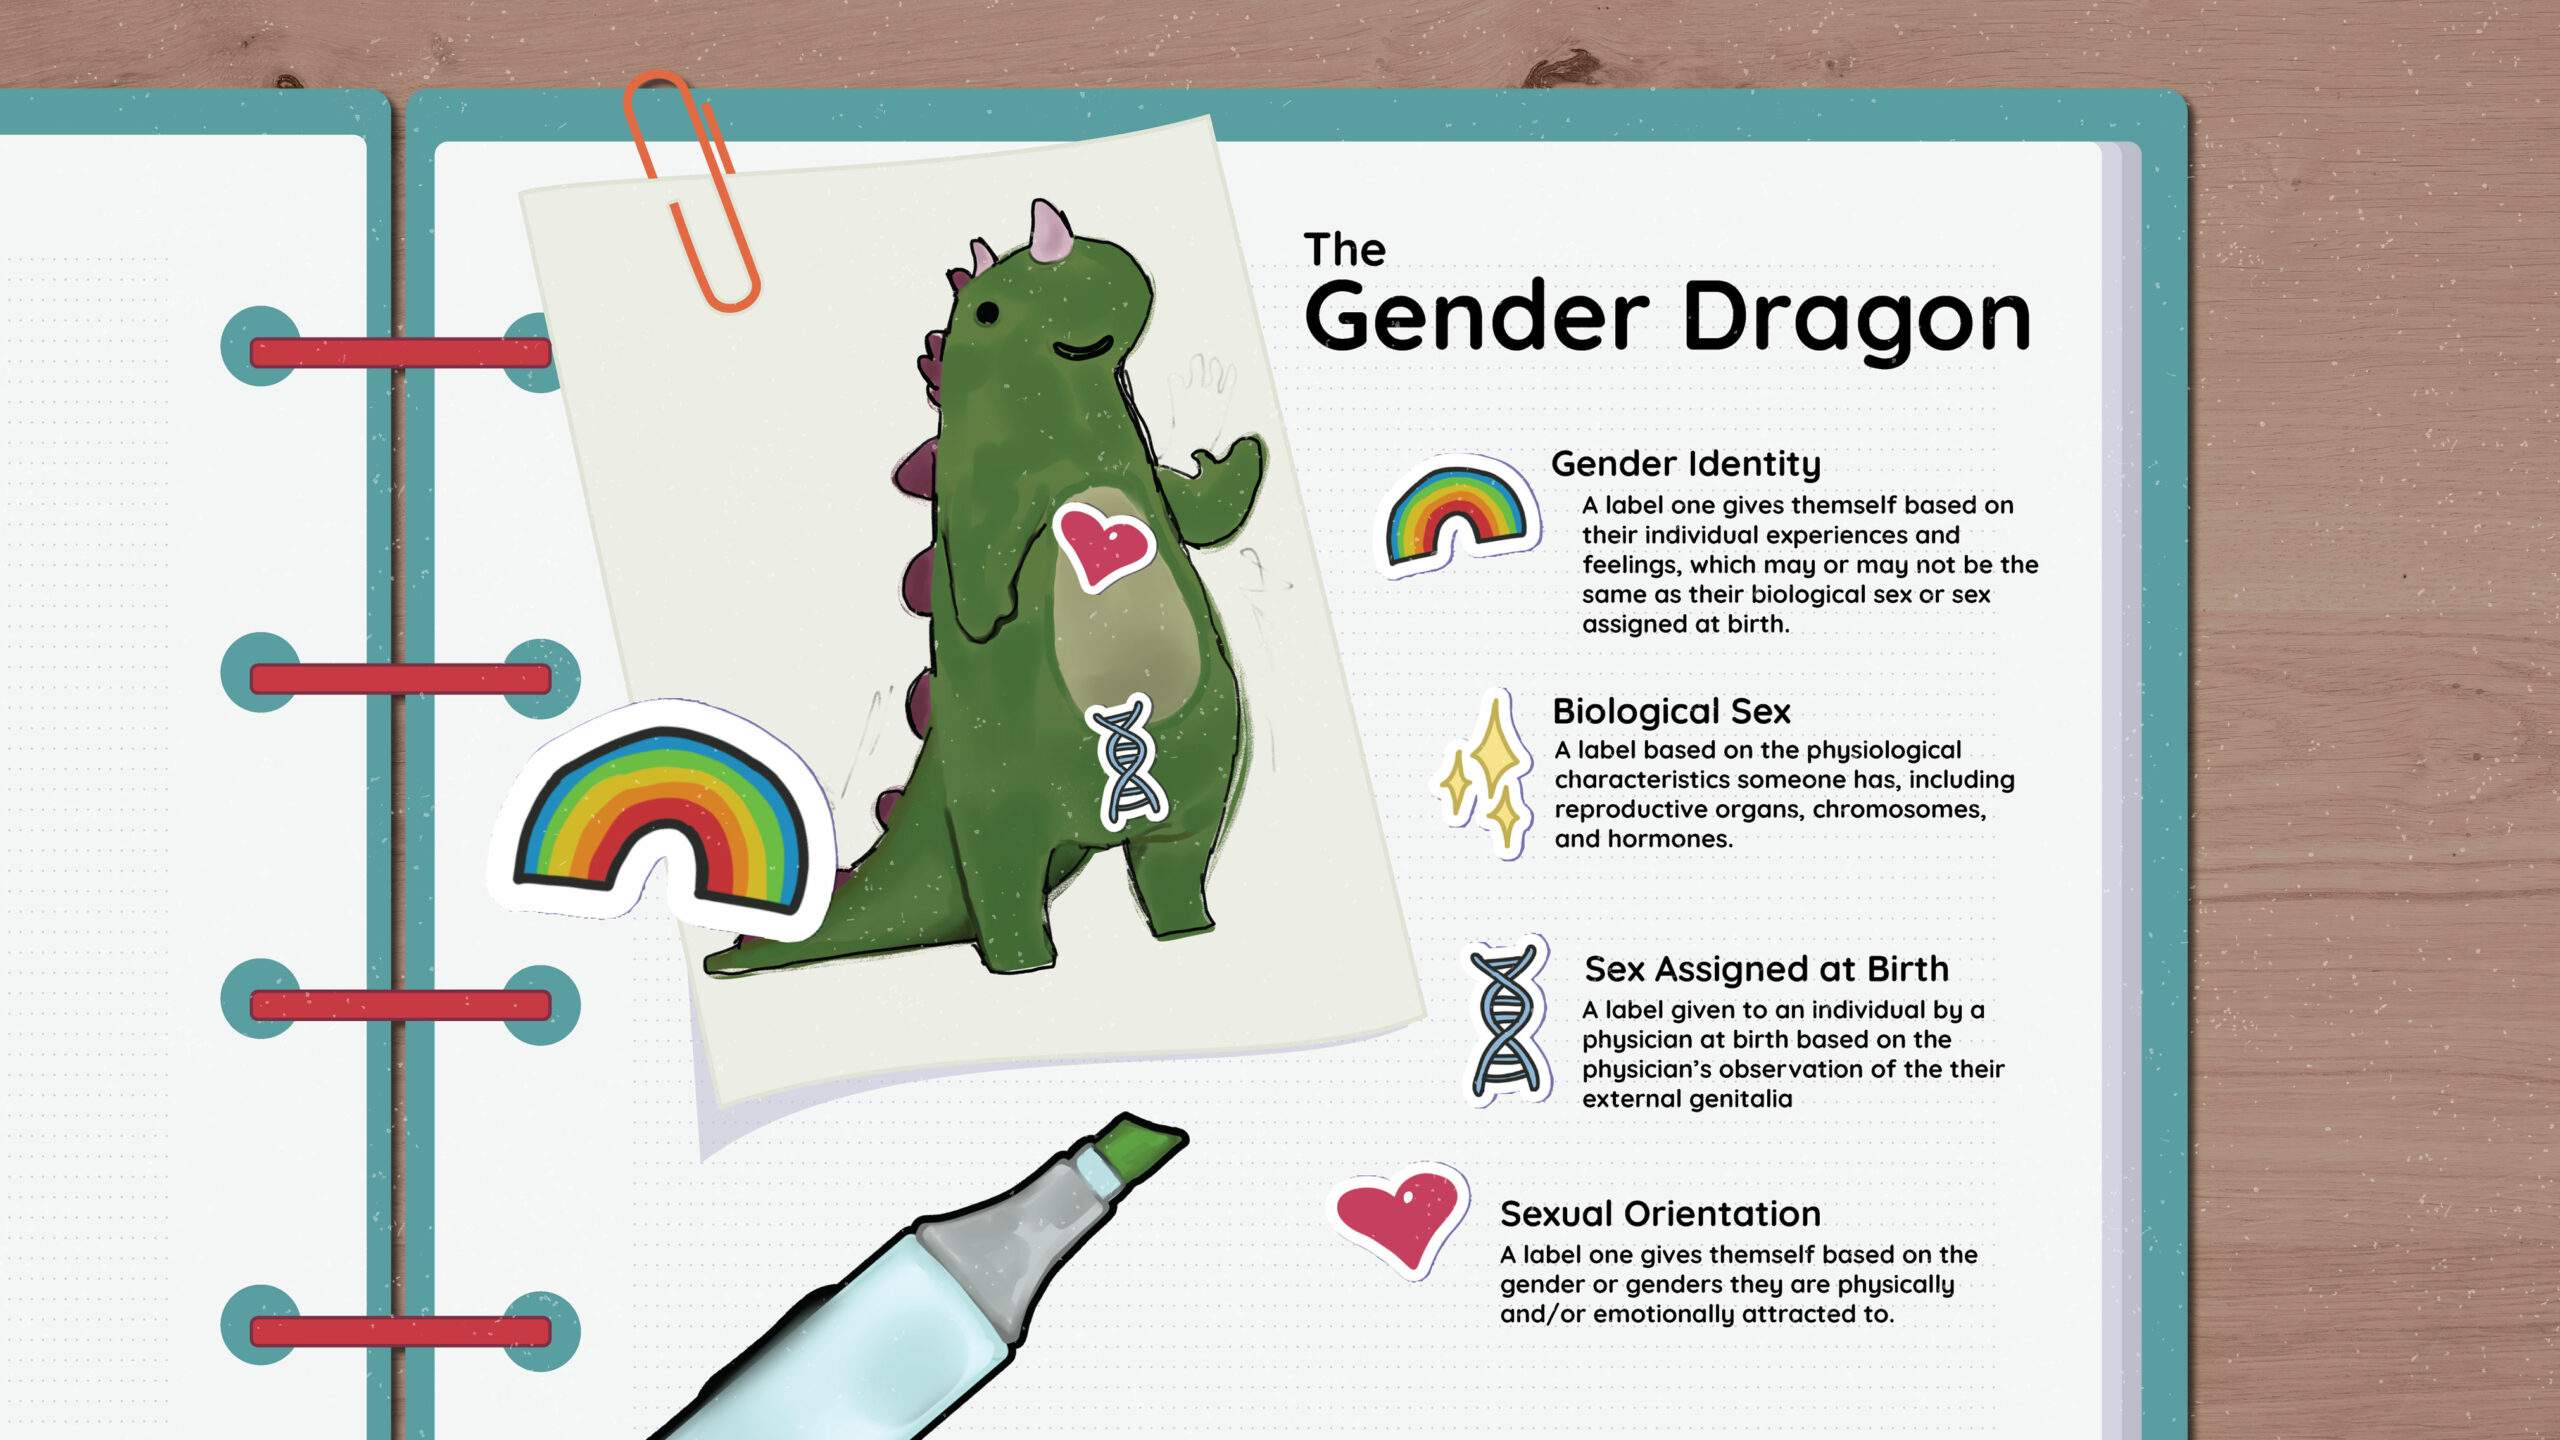 https://coderainbow.training/wp-content/uploads/2022/03/Gender-Dragon-Full-scaled.jpg